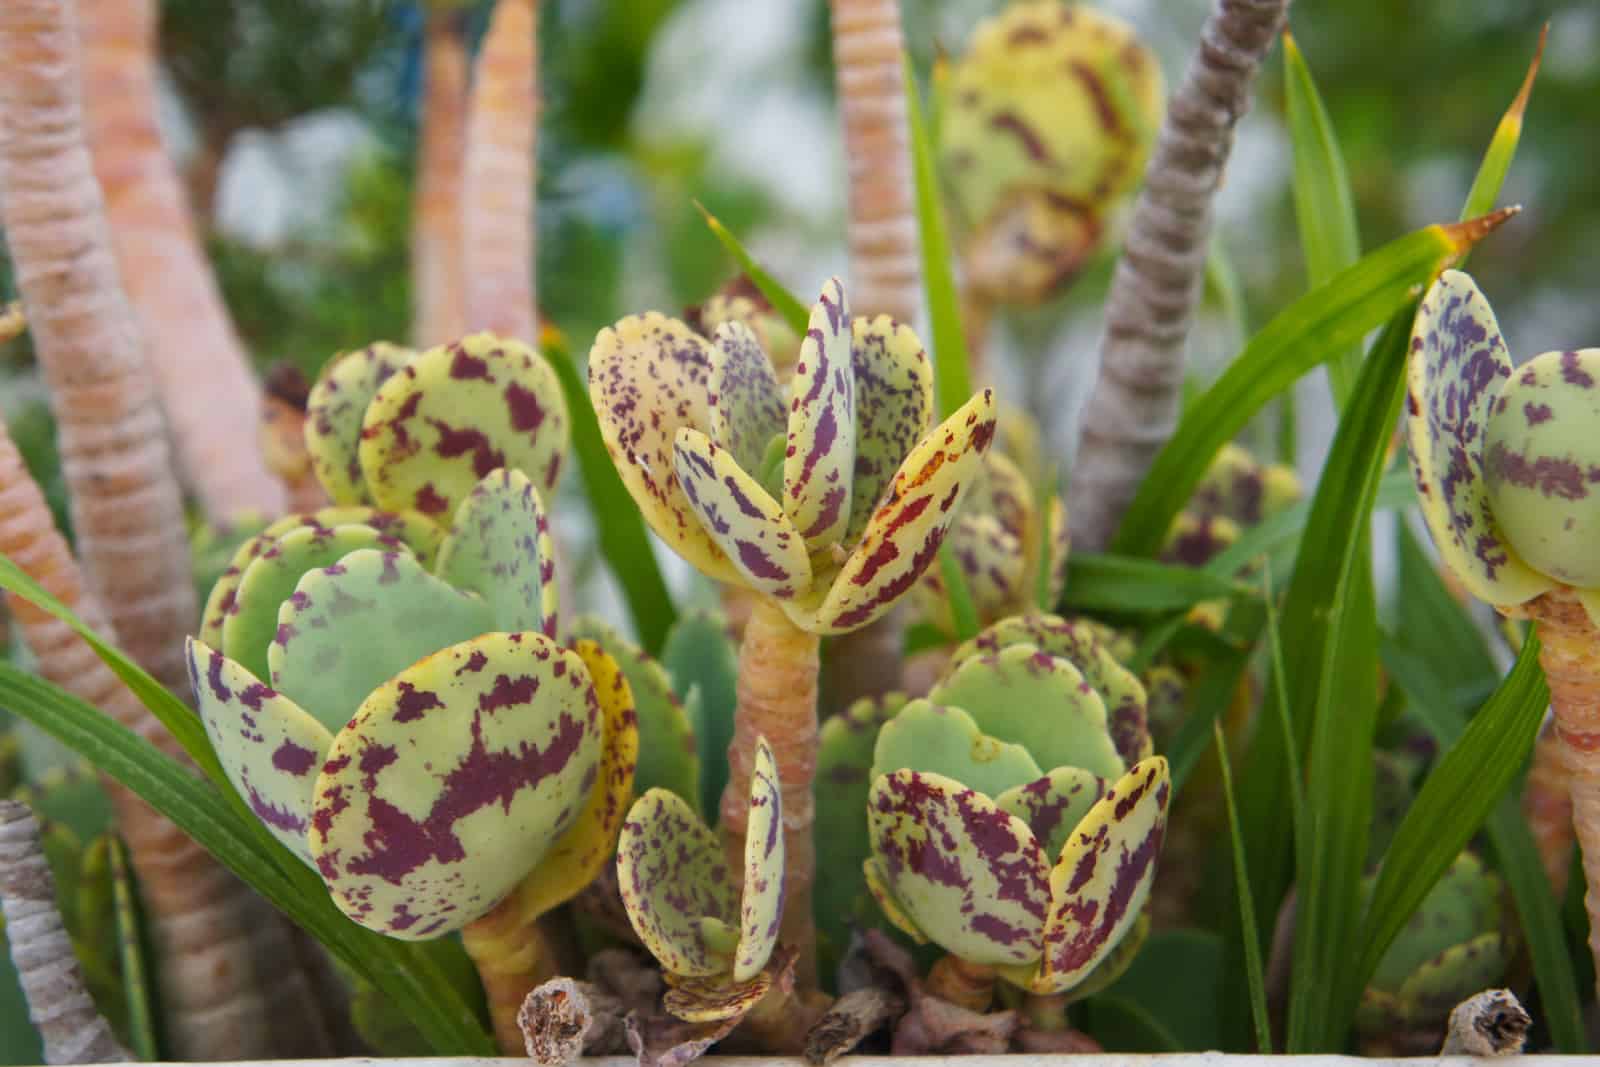 Kalanchoe marmorata or penwiper plant